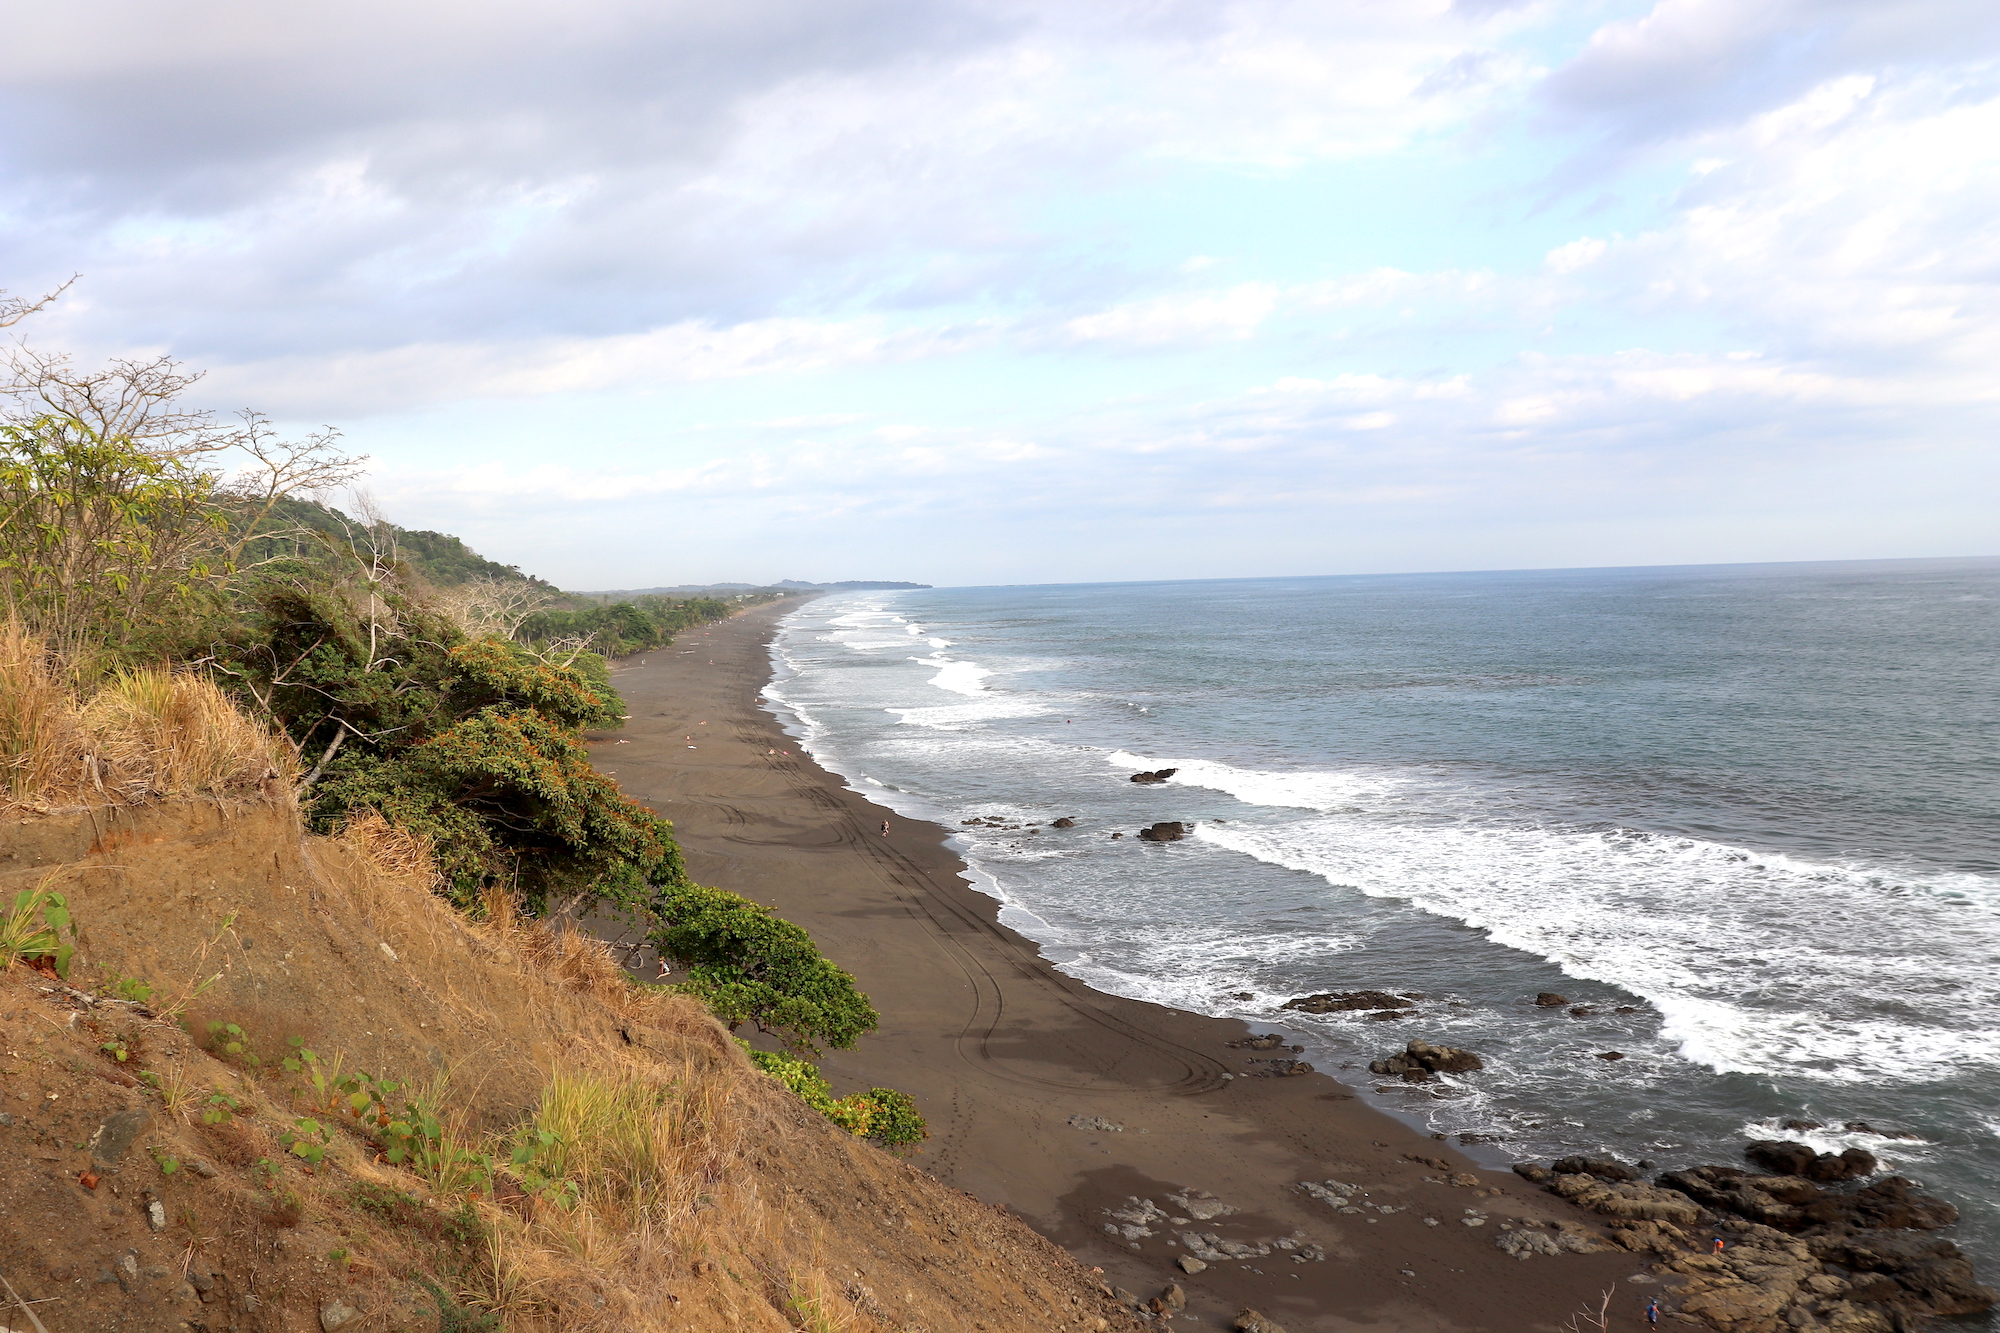 The wonderful beach coast of Costa Rica!